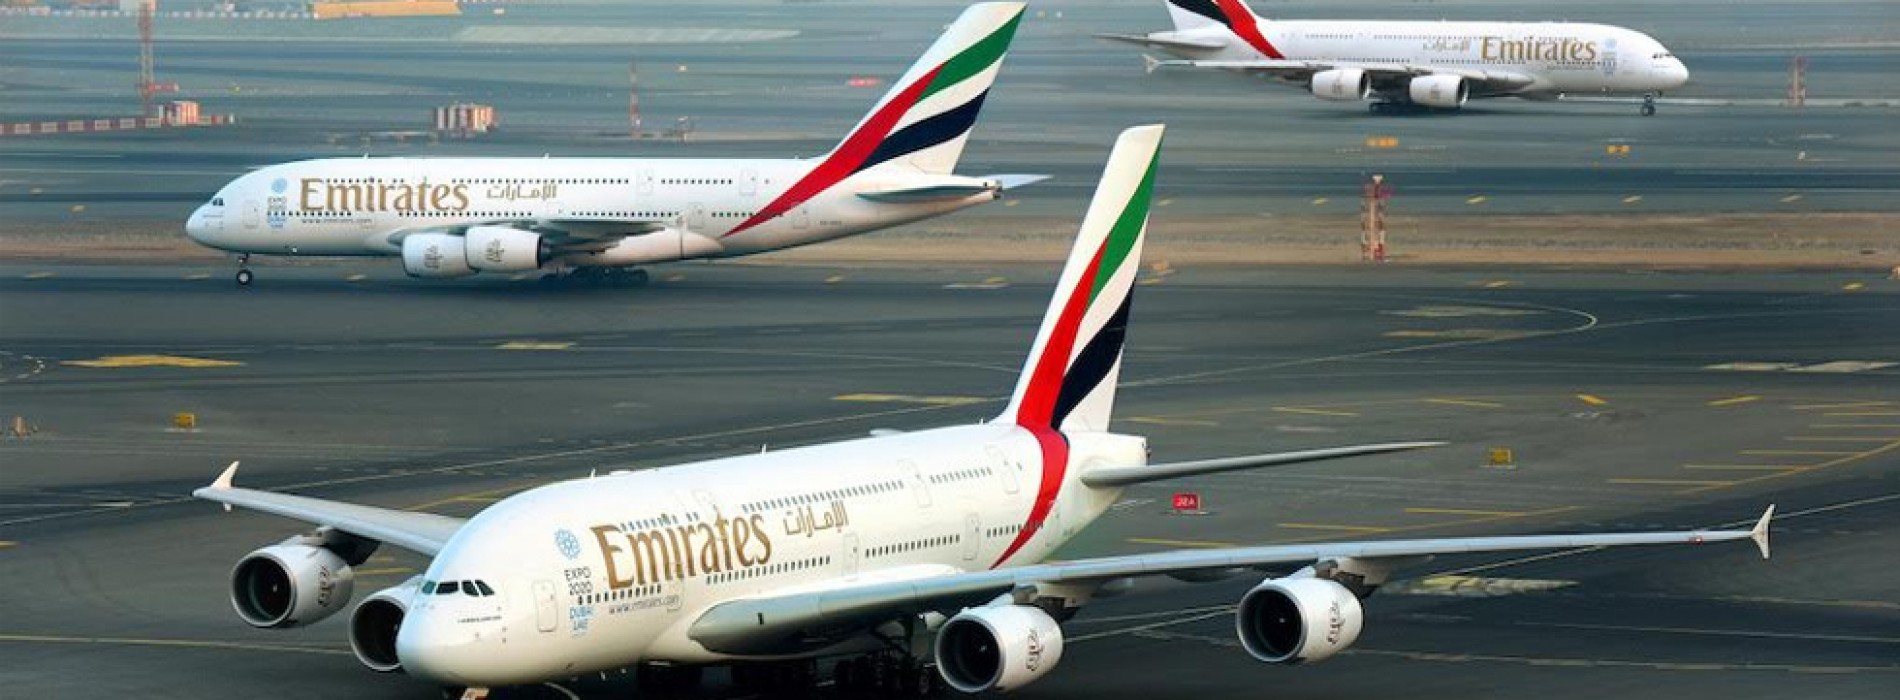 UAE airports forecast 6.3% passenger growth in 2017 despite headwinds